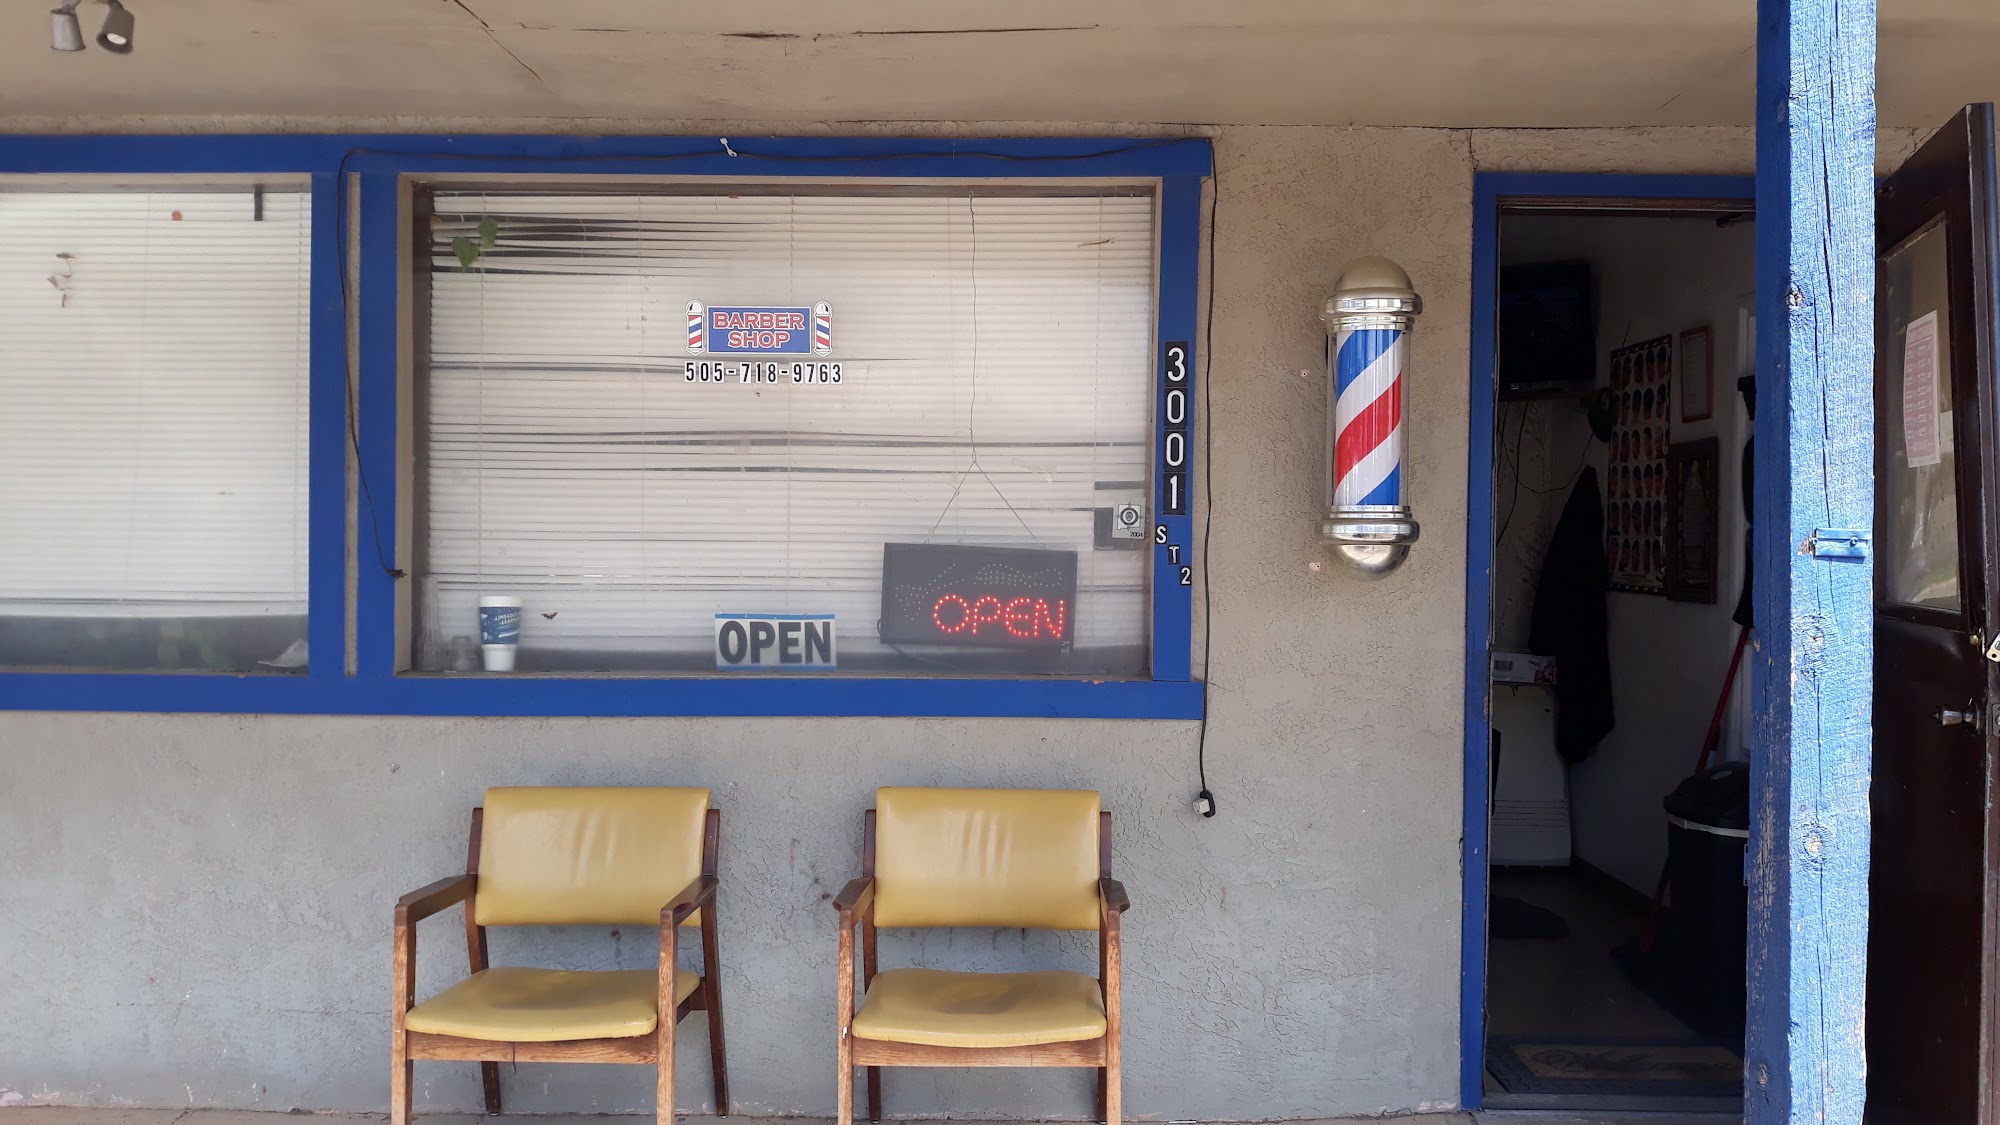 The Barber Shop 3001 Hot Springs Blvd, Las Vegas New Mexico 87701